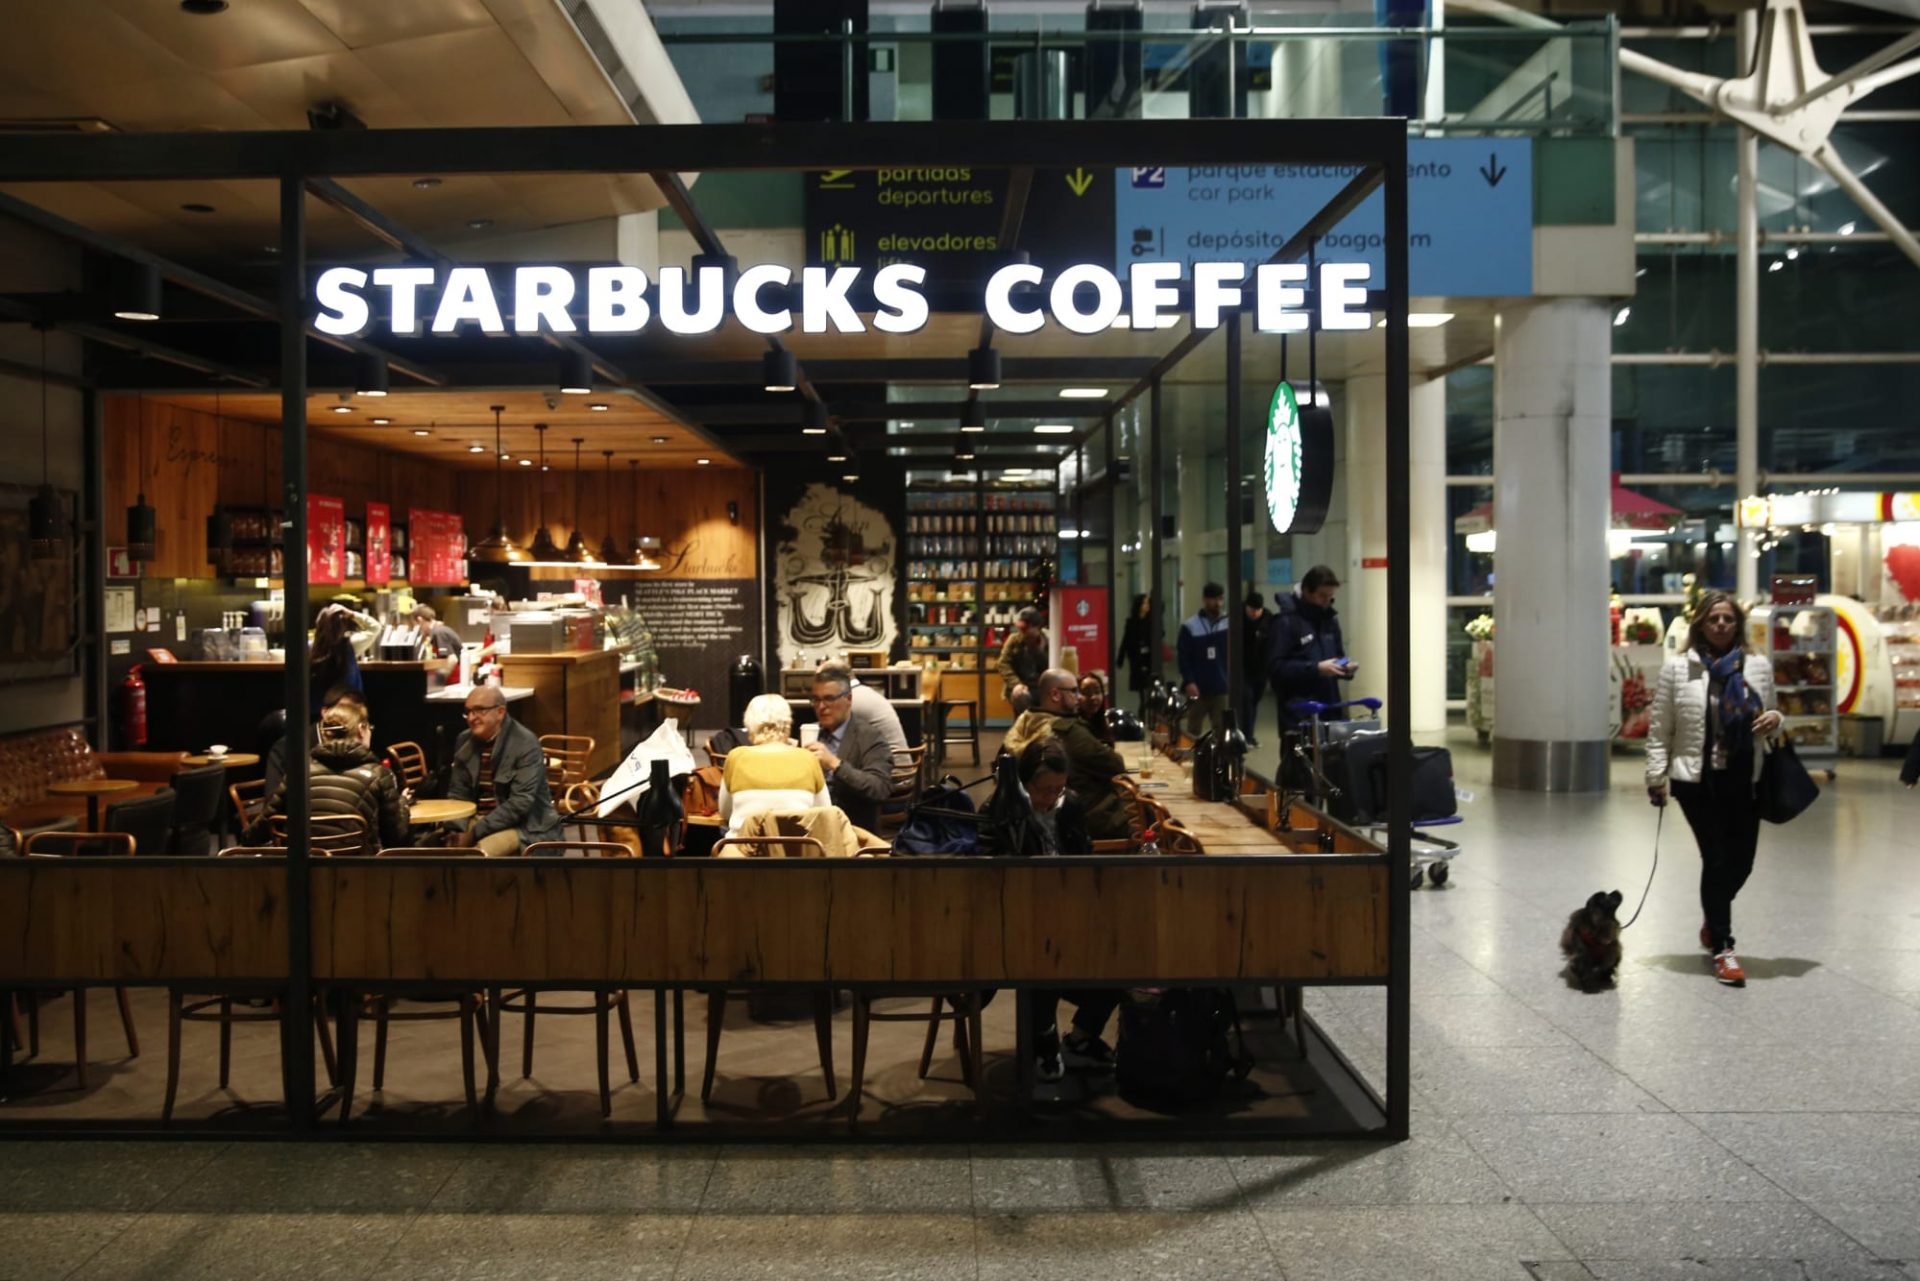 Is Starbucks launch on Christmas Eve 2020?